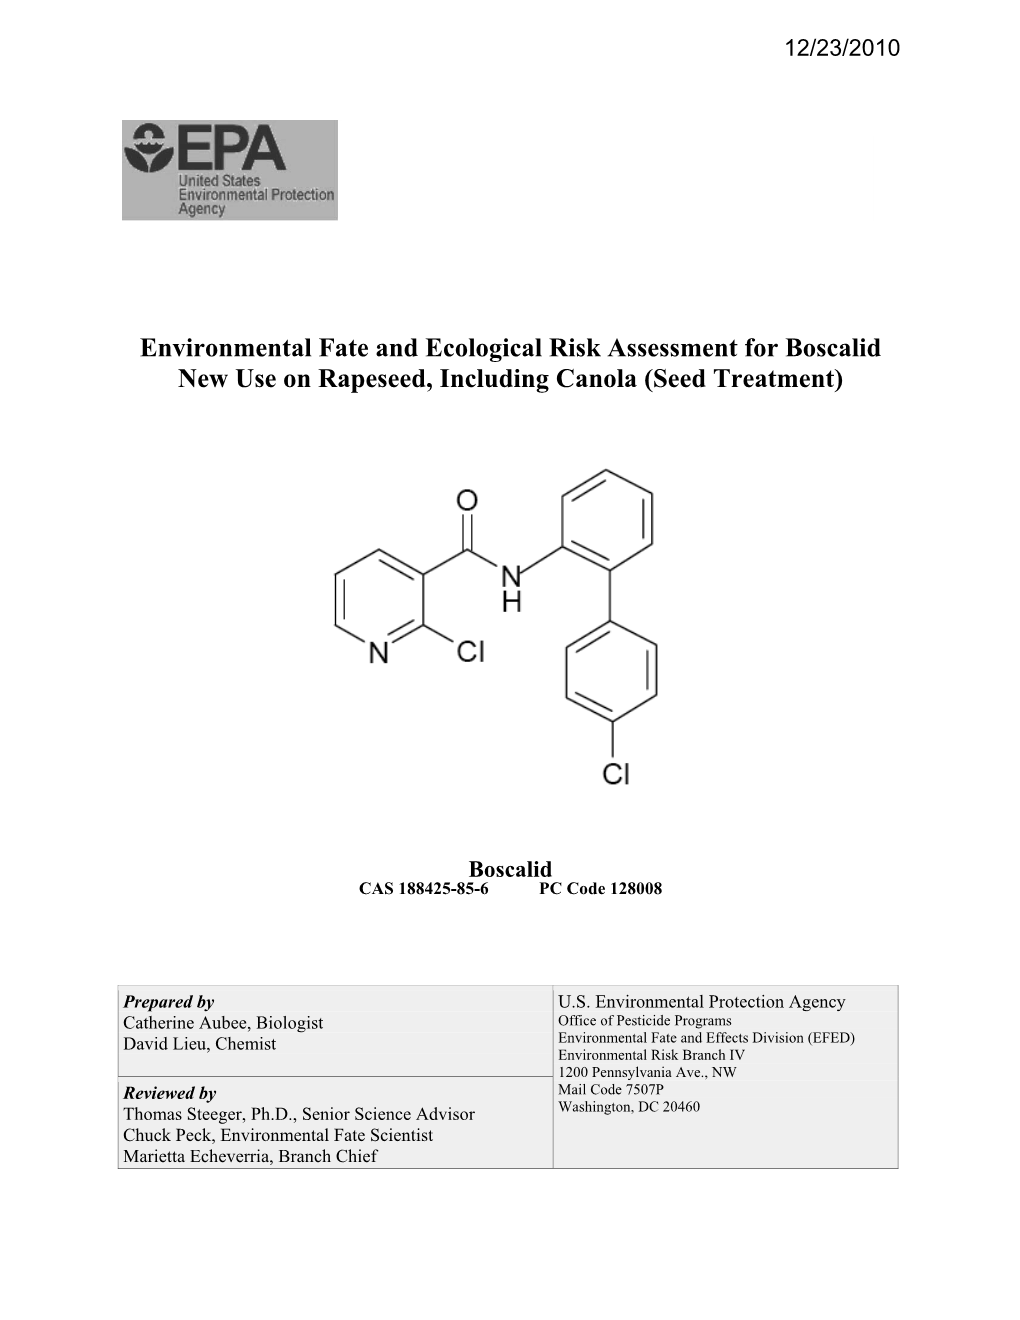 US EPA-Pesticides; Boscalid